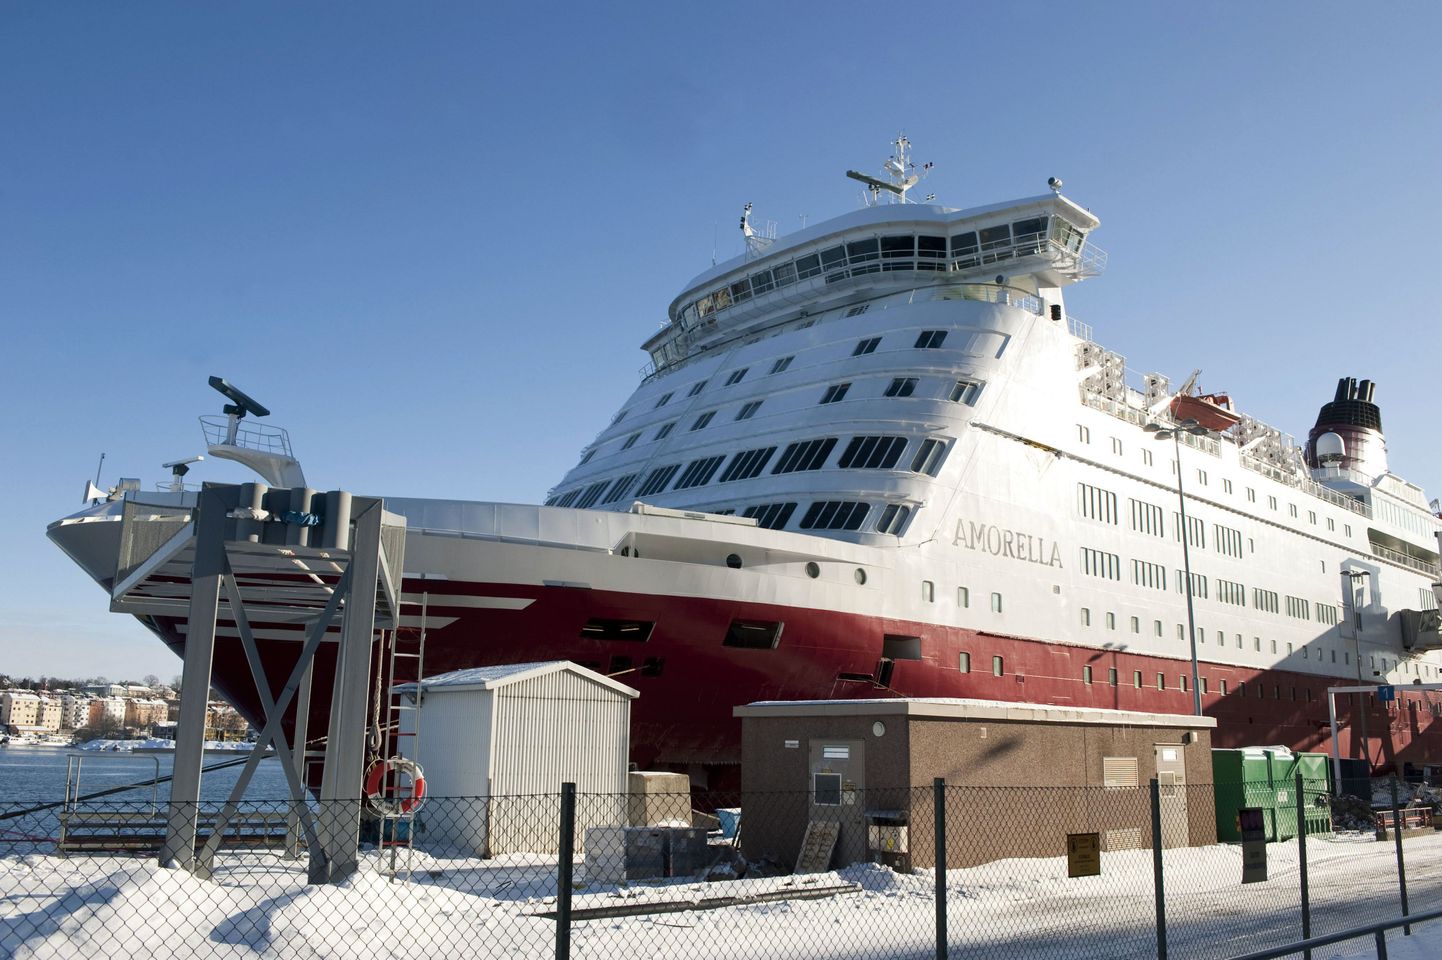 Viking Line'i Amorella Stockholmi sadamas.